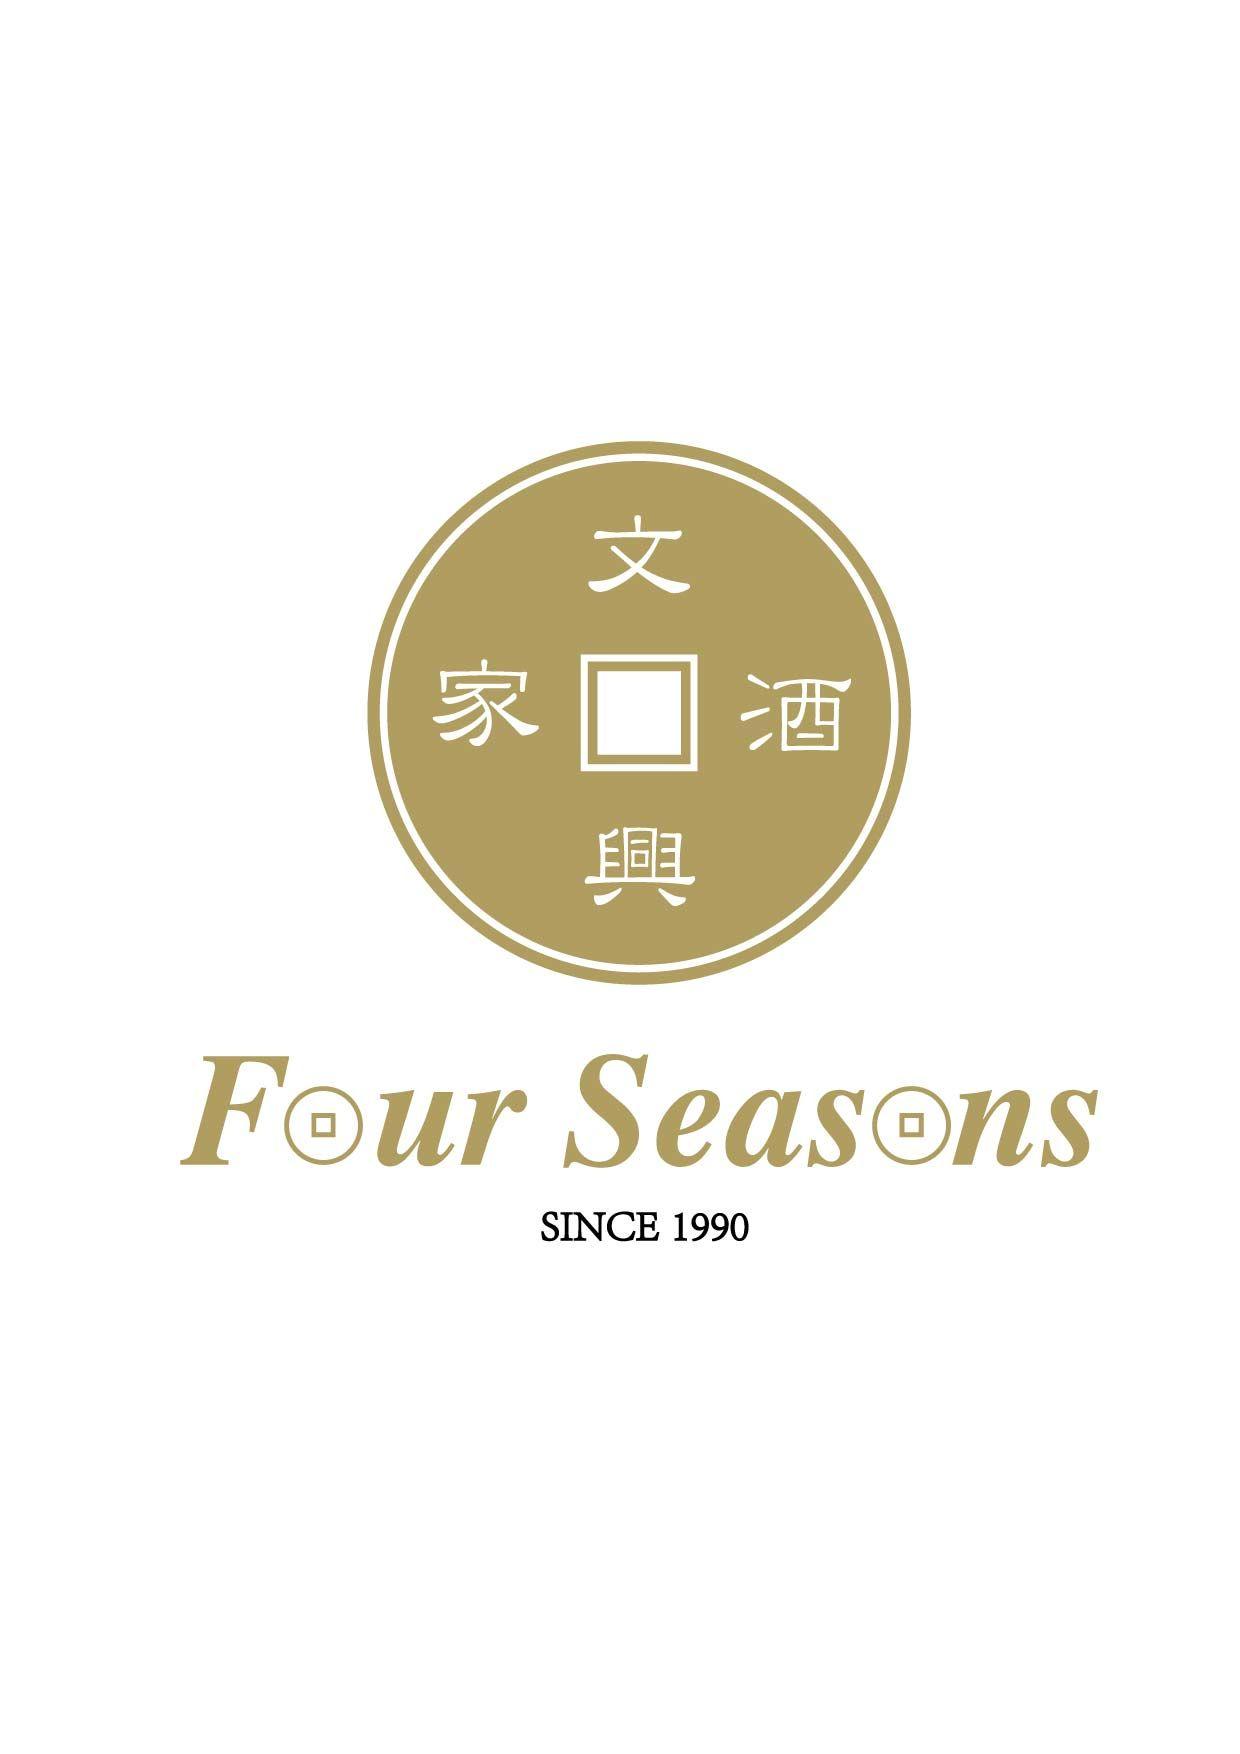 Four Seasons Logo - Four seasons logo Bang Oriental